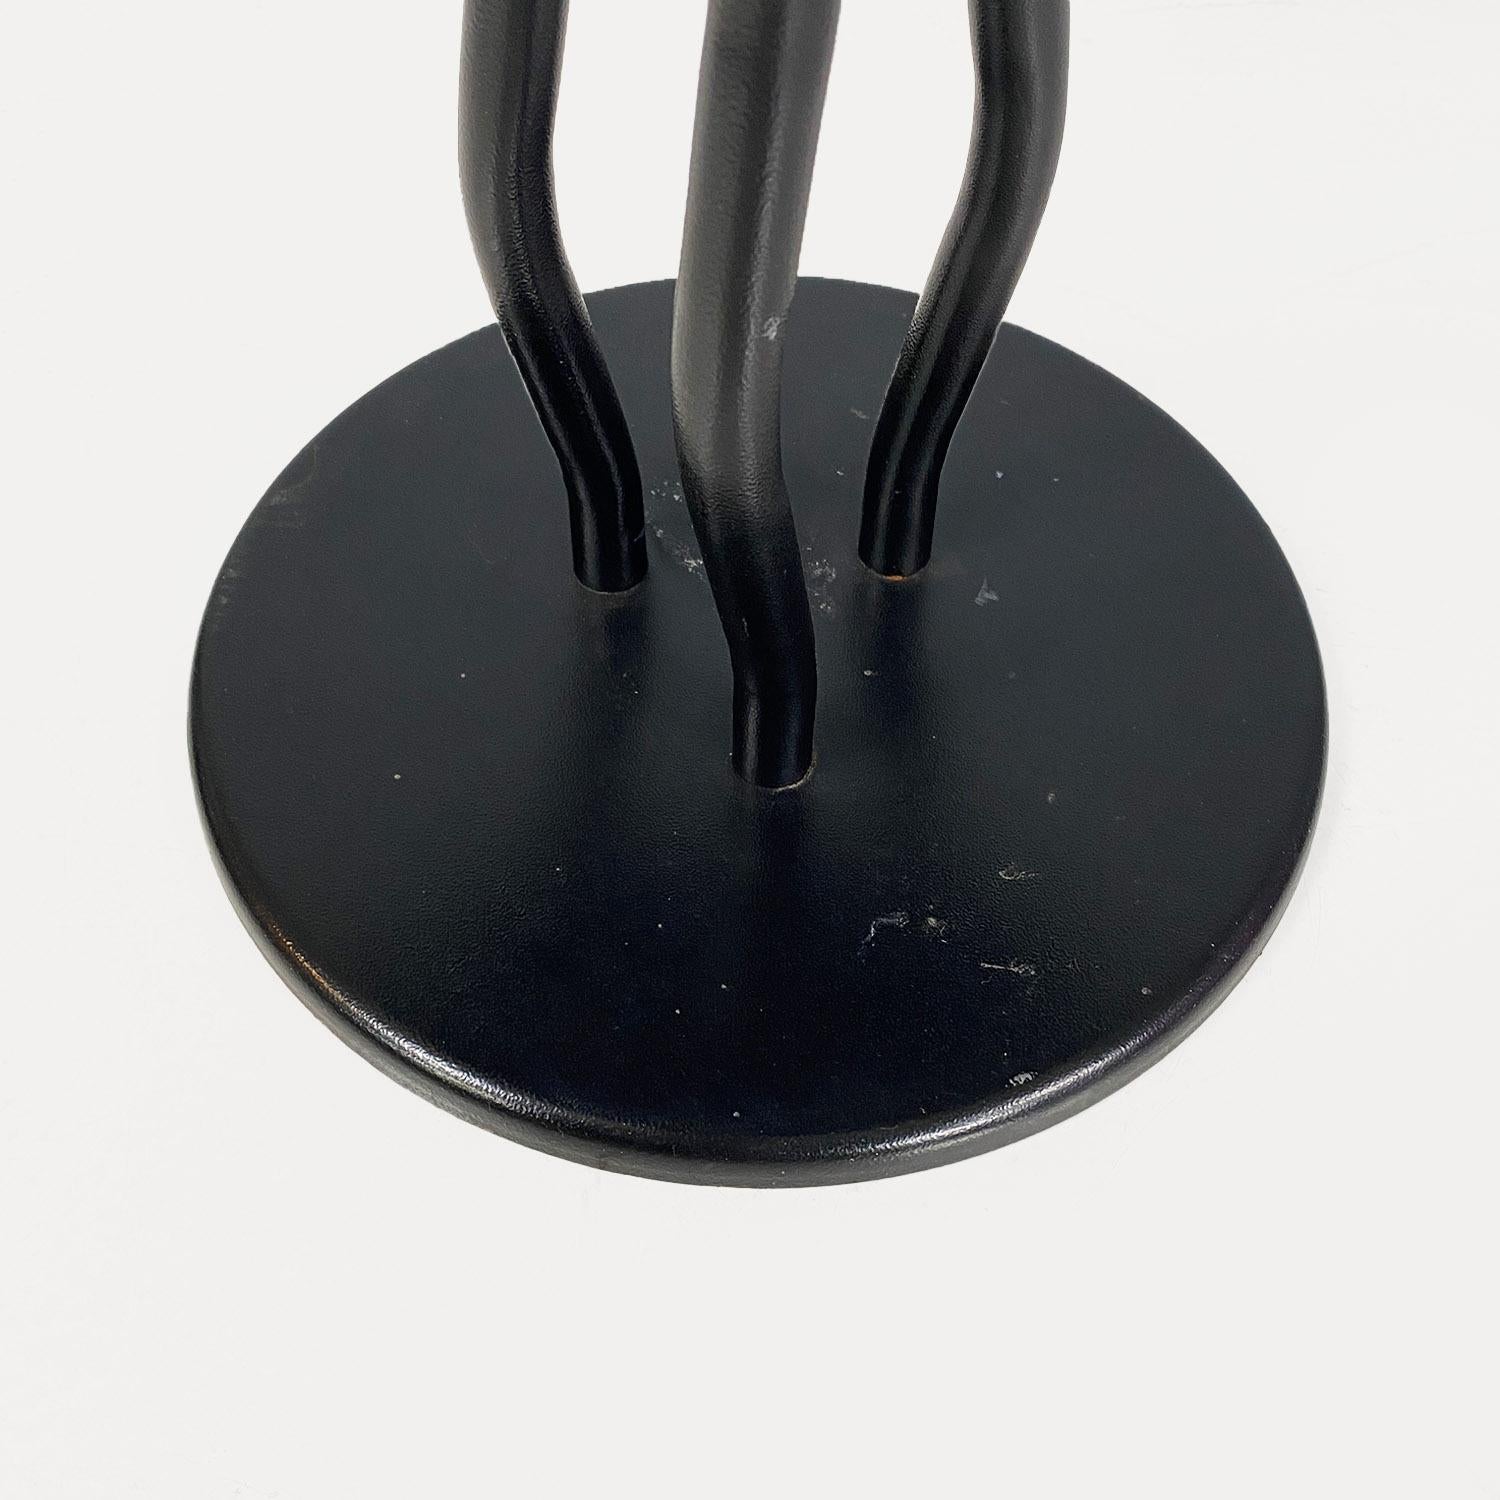 Italian modern black metal round coffee table with three vawy legs, 1980s 1